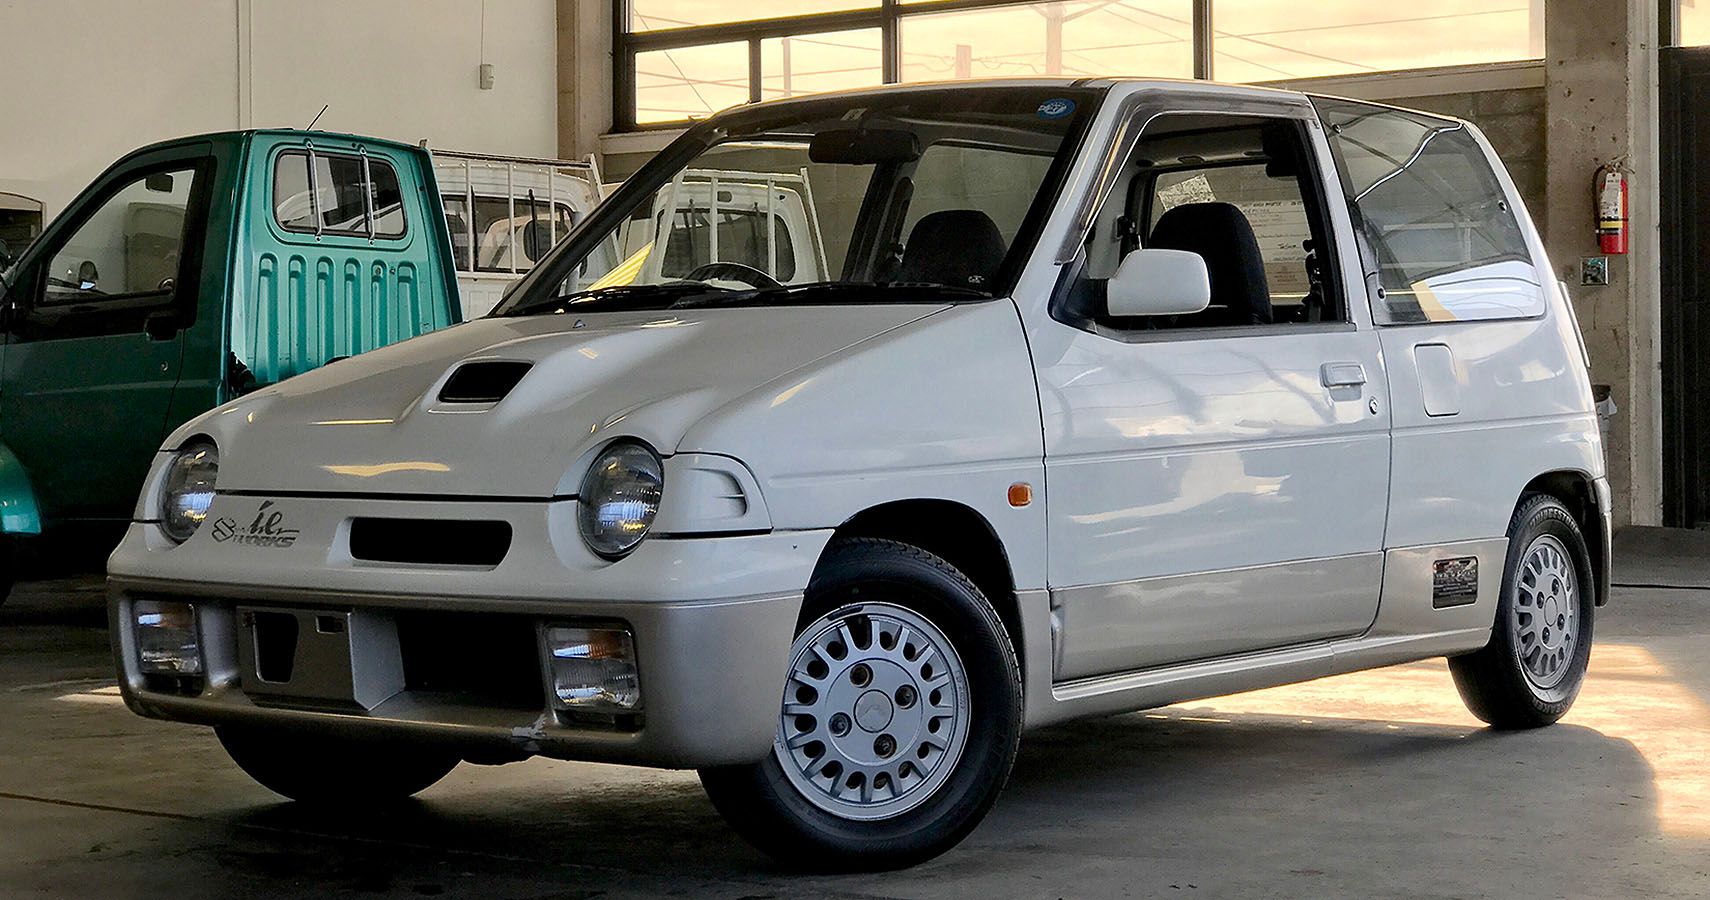 Ridiculous, But Still Cute: Suzuki Alto Works